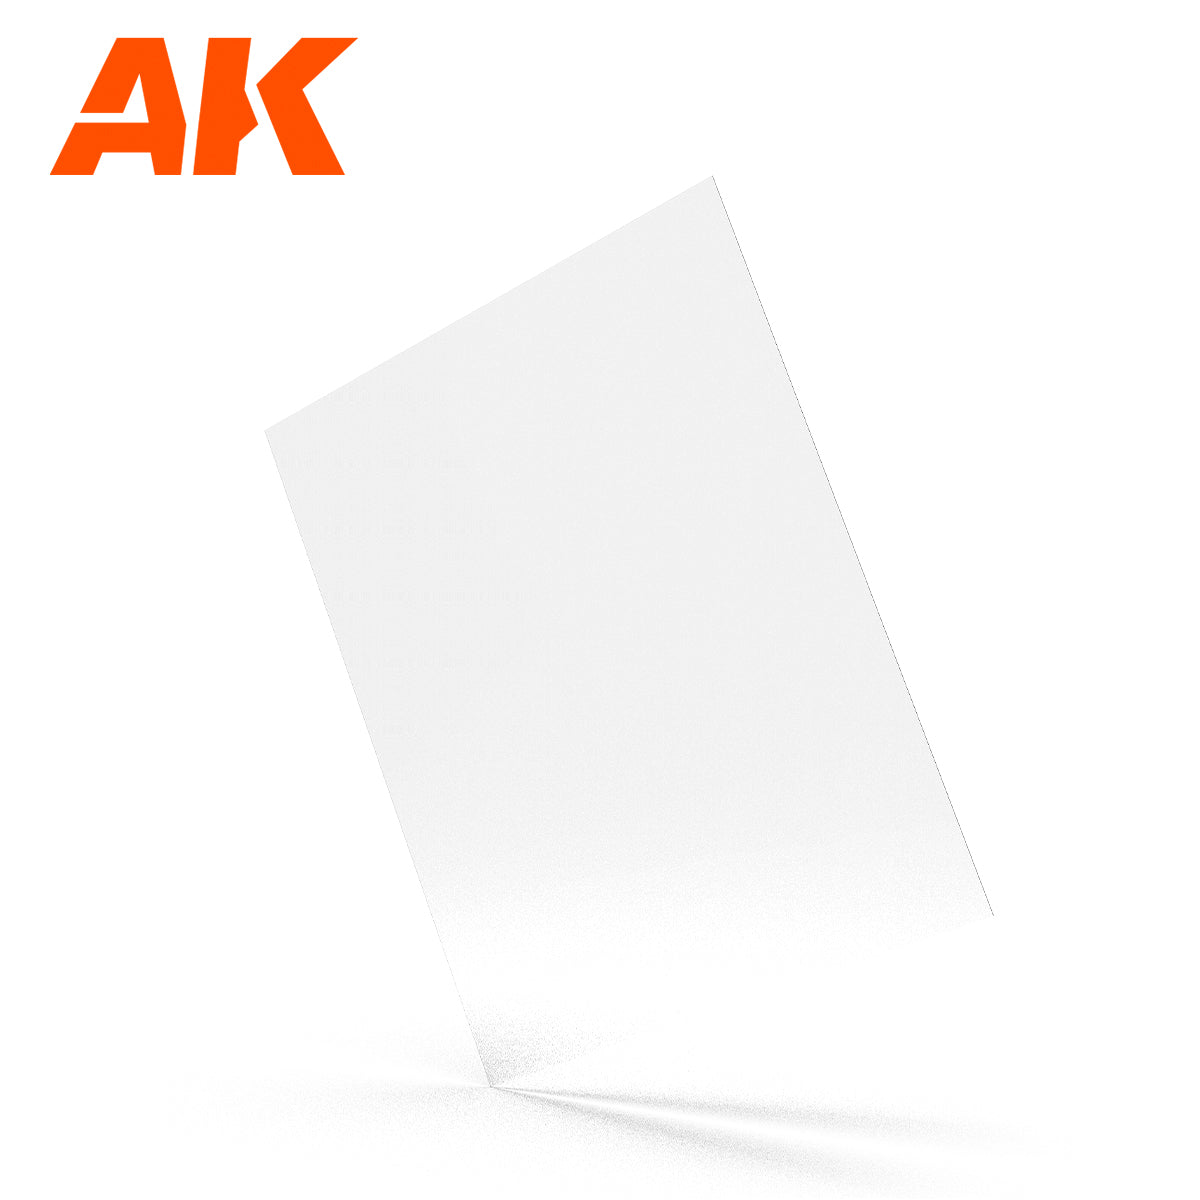 AK6574 - Styrene sheet - 0.5mm thickness x 245 x 195mm